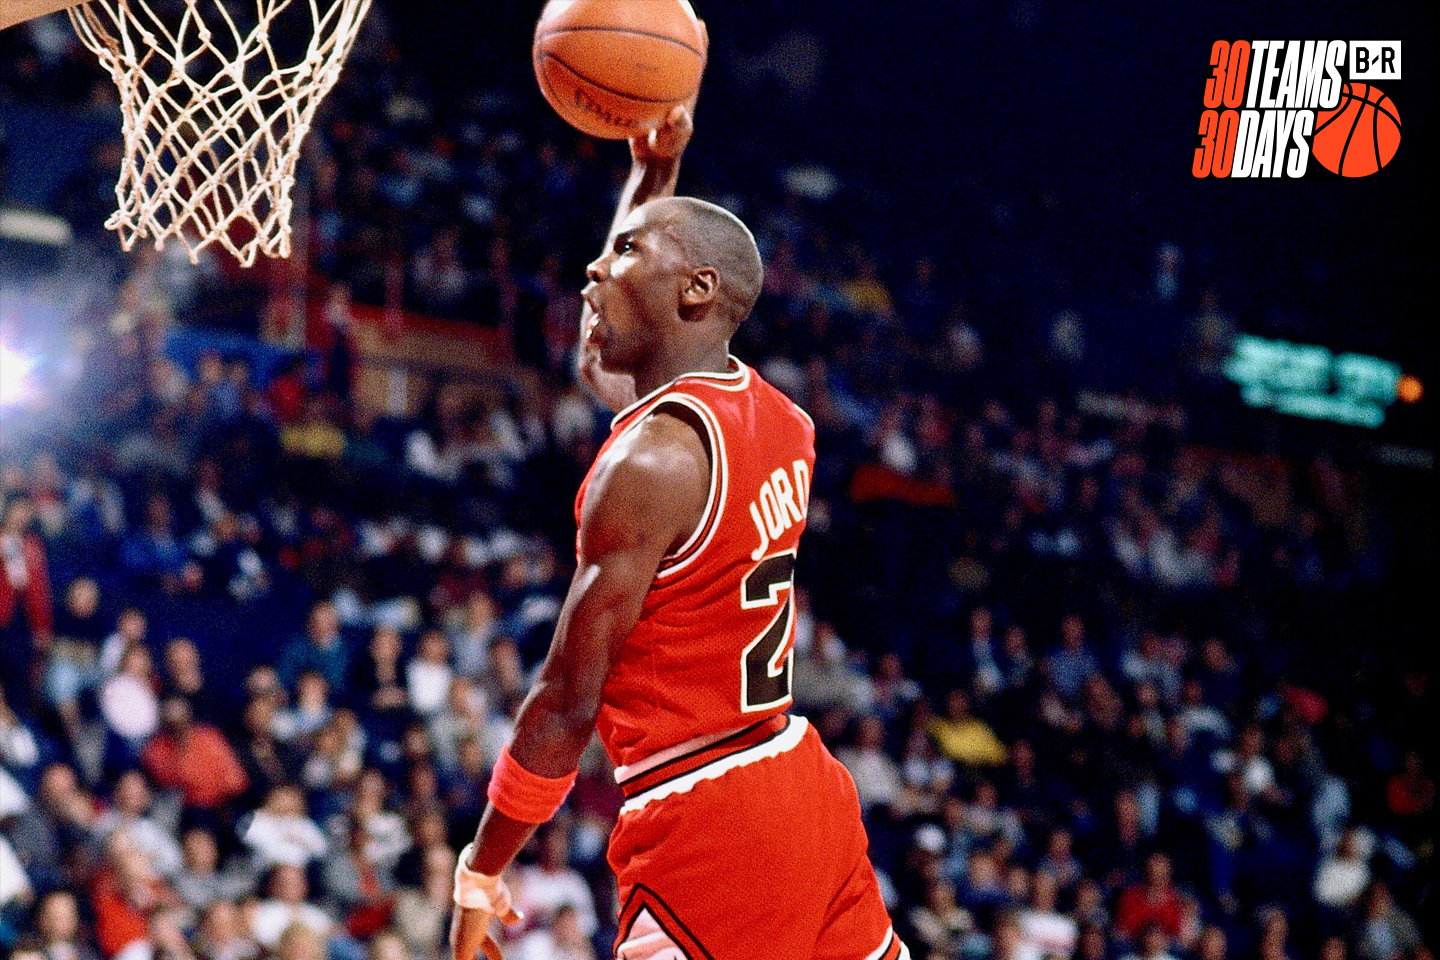 Wallpaper: Michael Jordan's Career Highlights